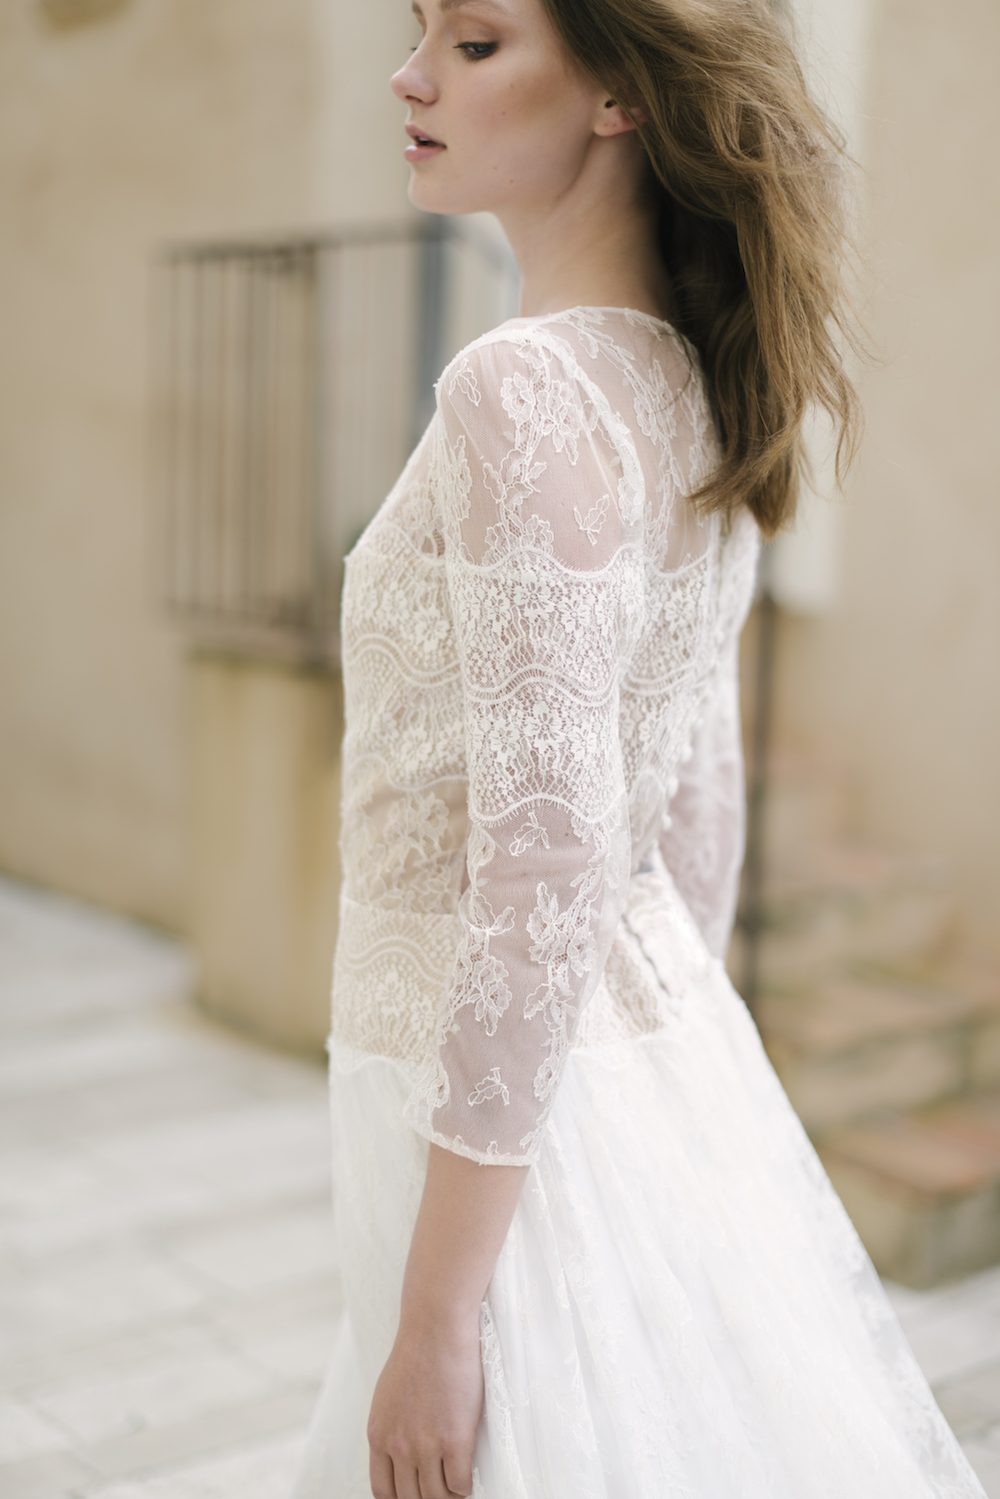 Atelier Anonyme Collection 2018 - Robes de mariée - Blog Mariage Madame C